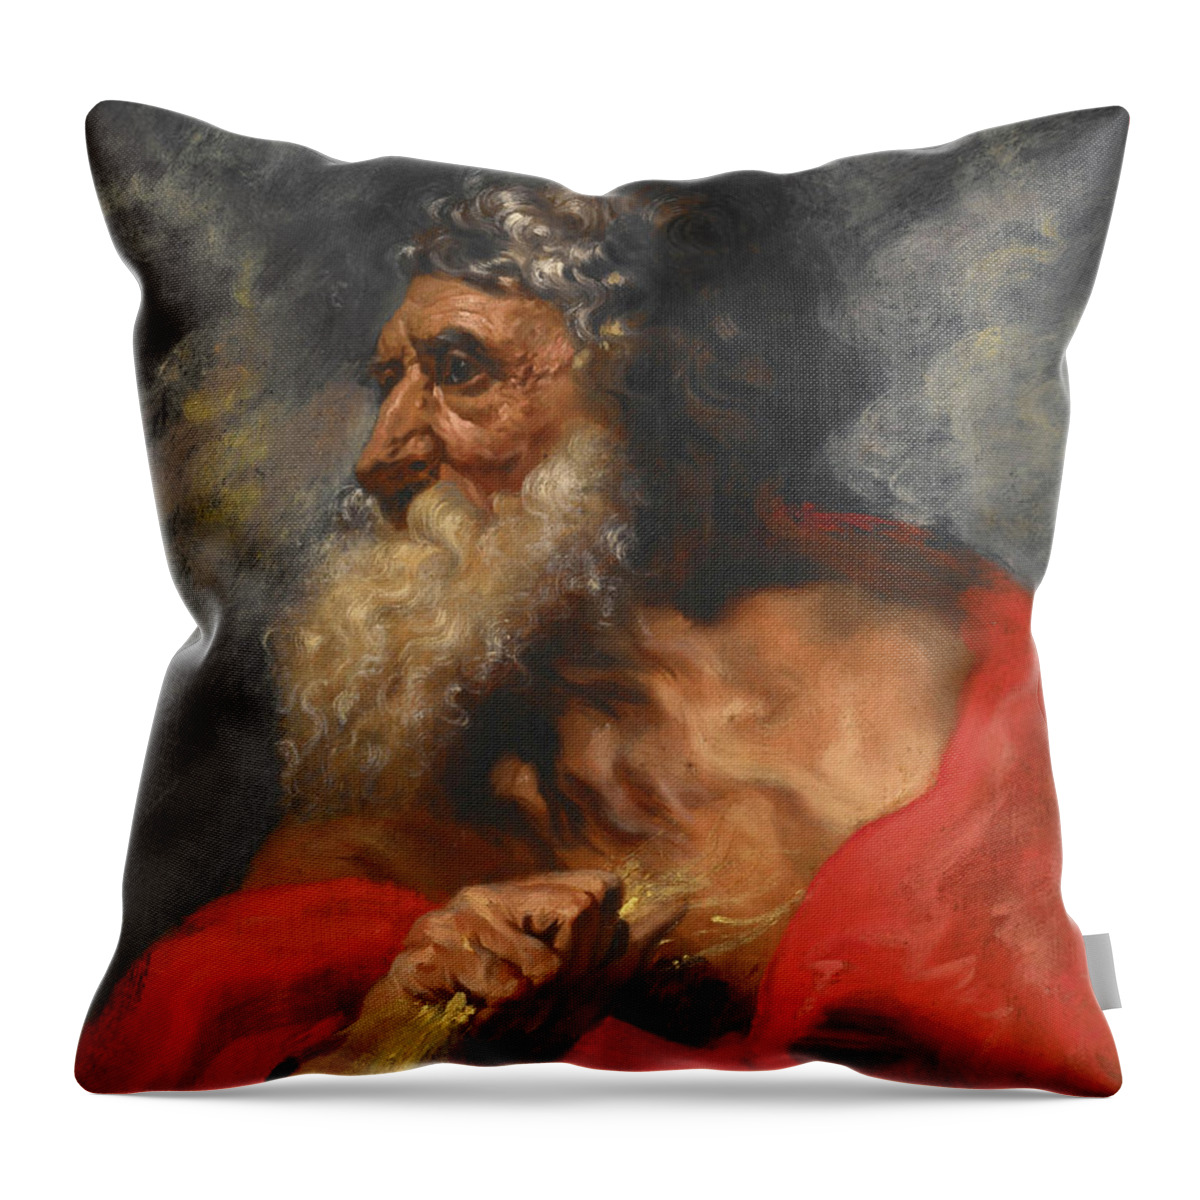 Jupiter Throw Pillow featuring the painting Jupiter by Jacob Jordaens